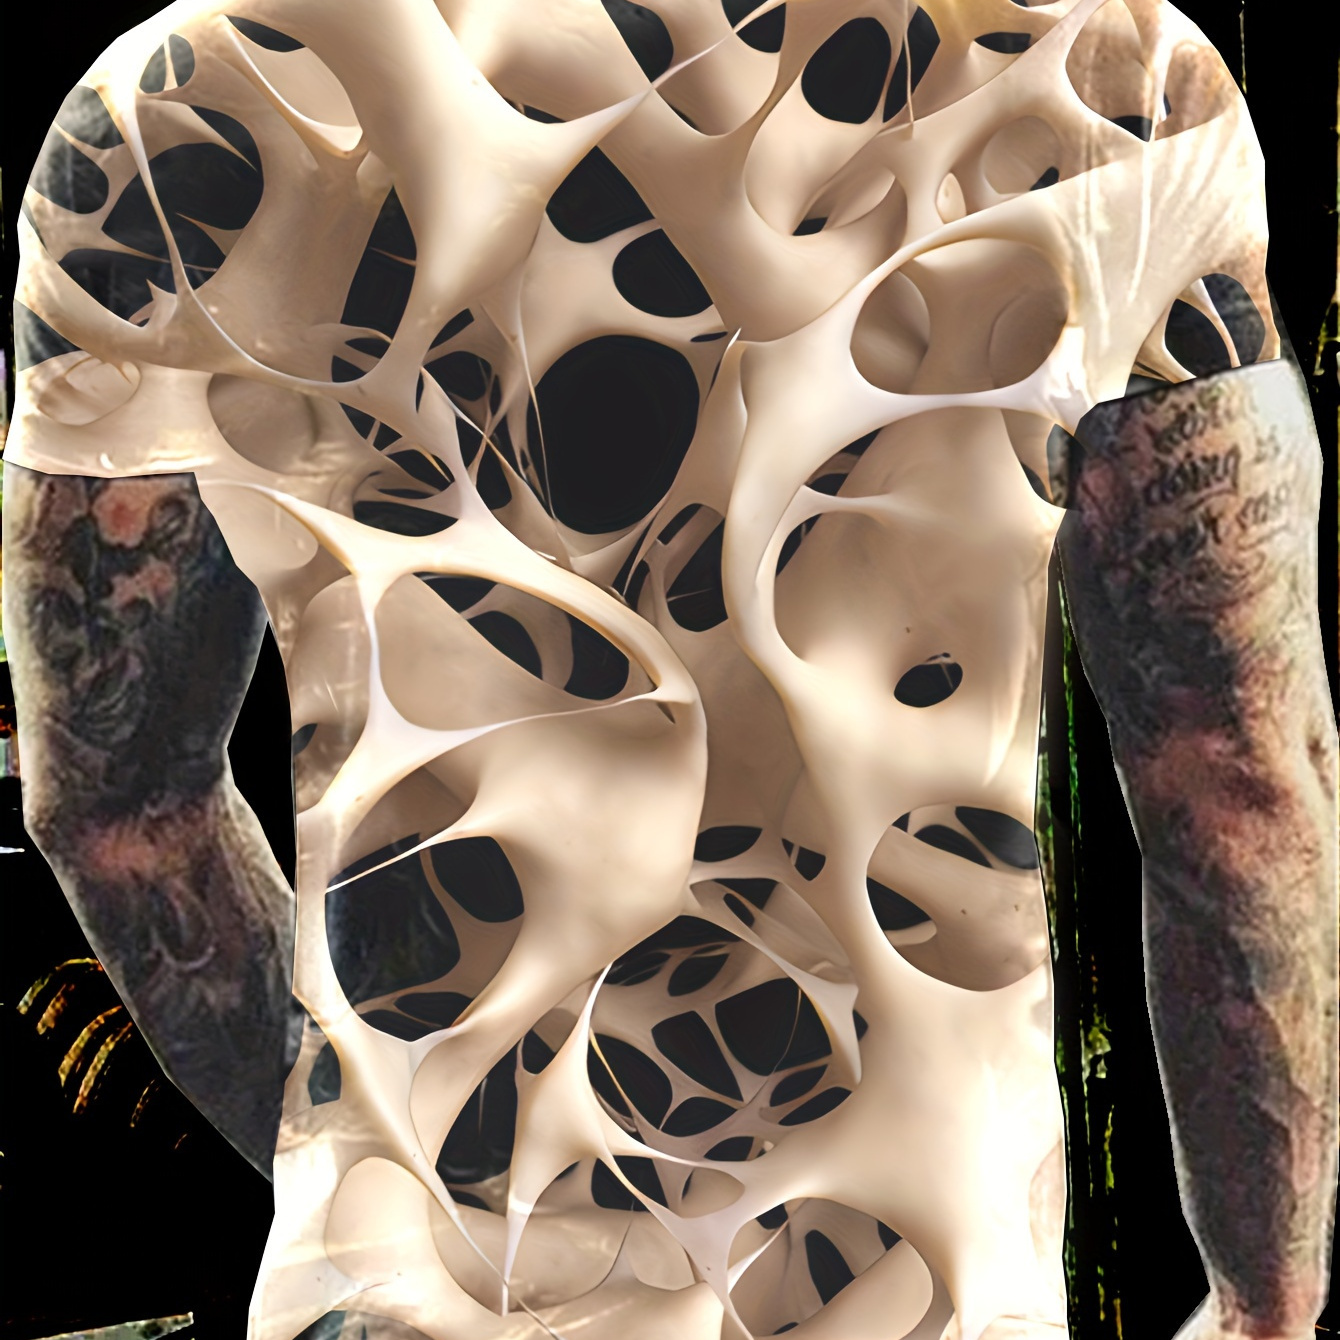 

Geometric Bones 3d Print Men's Fashion Short Sleeve Crew Neck T-shirt, Summer Outdoor